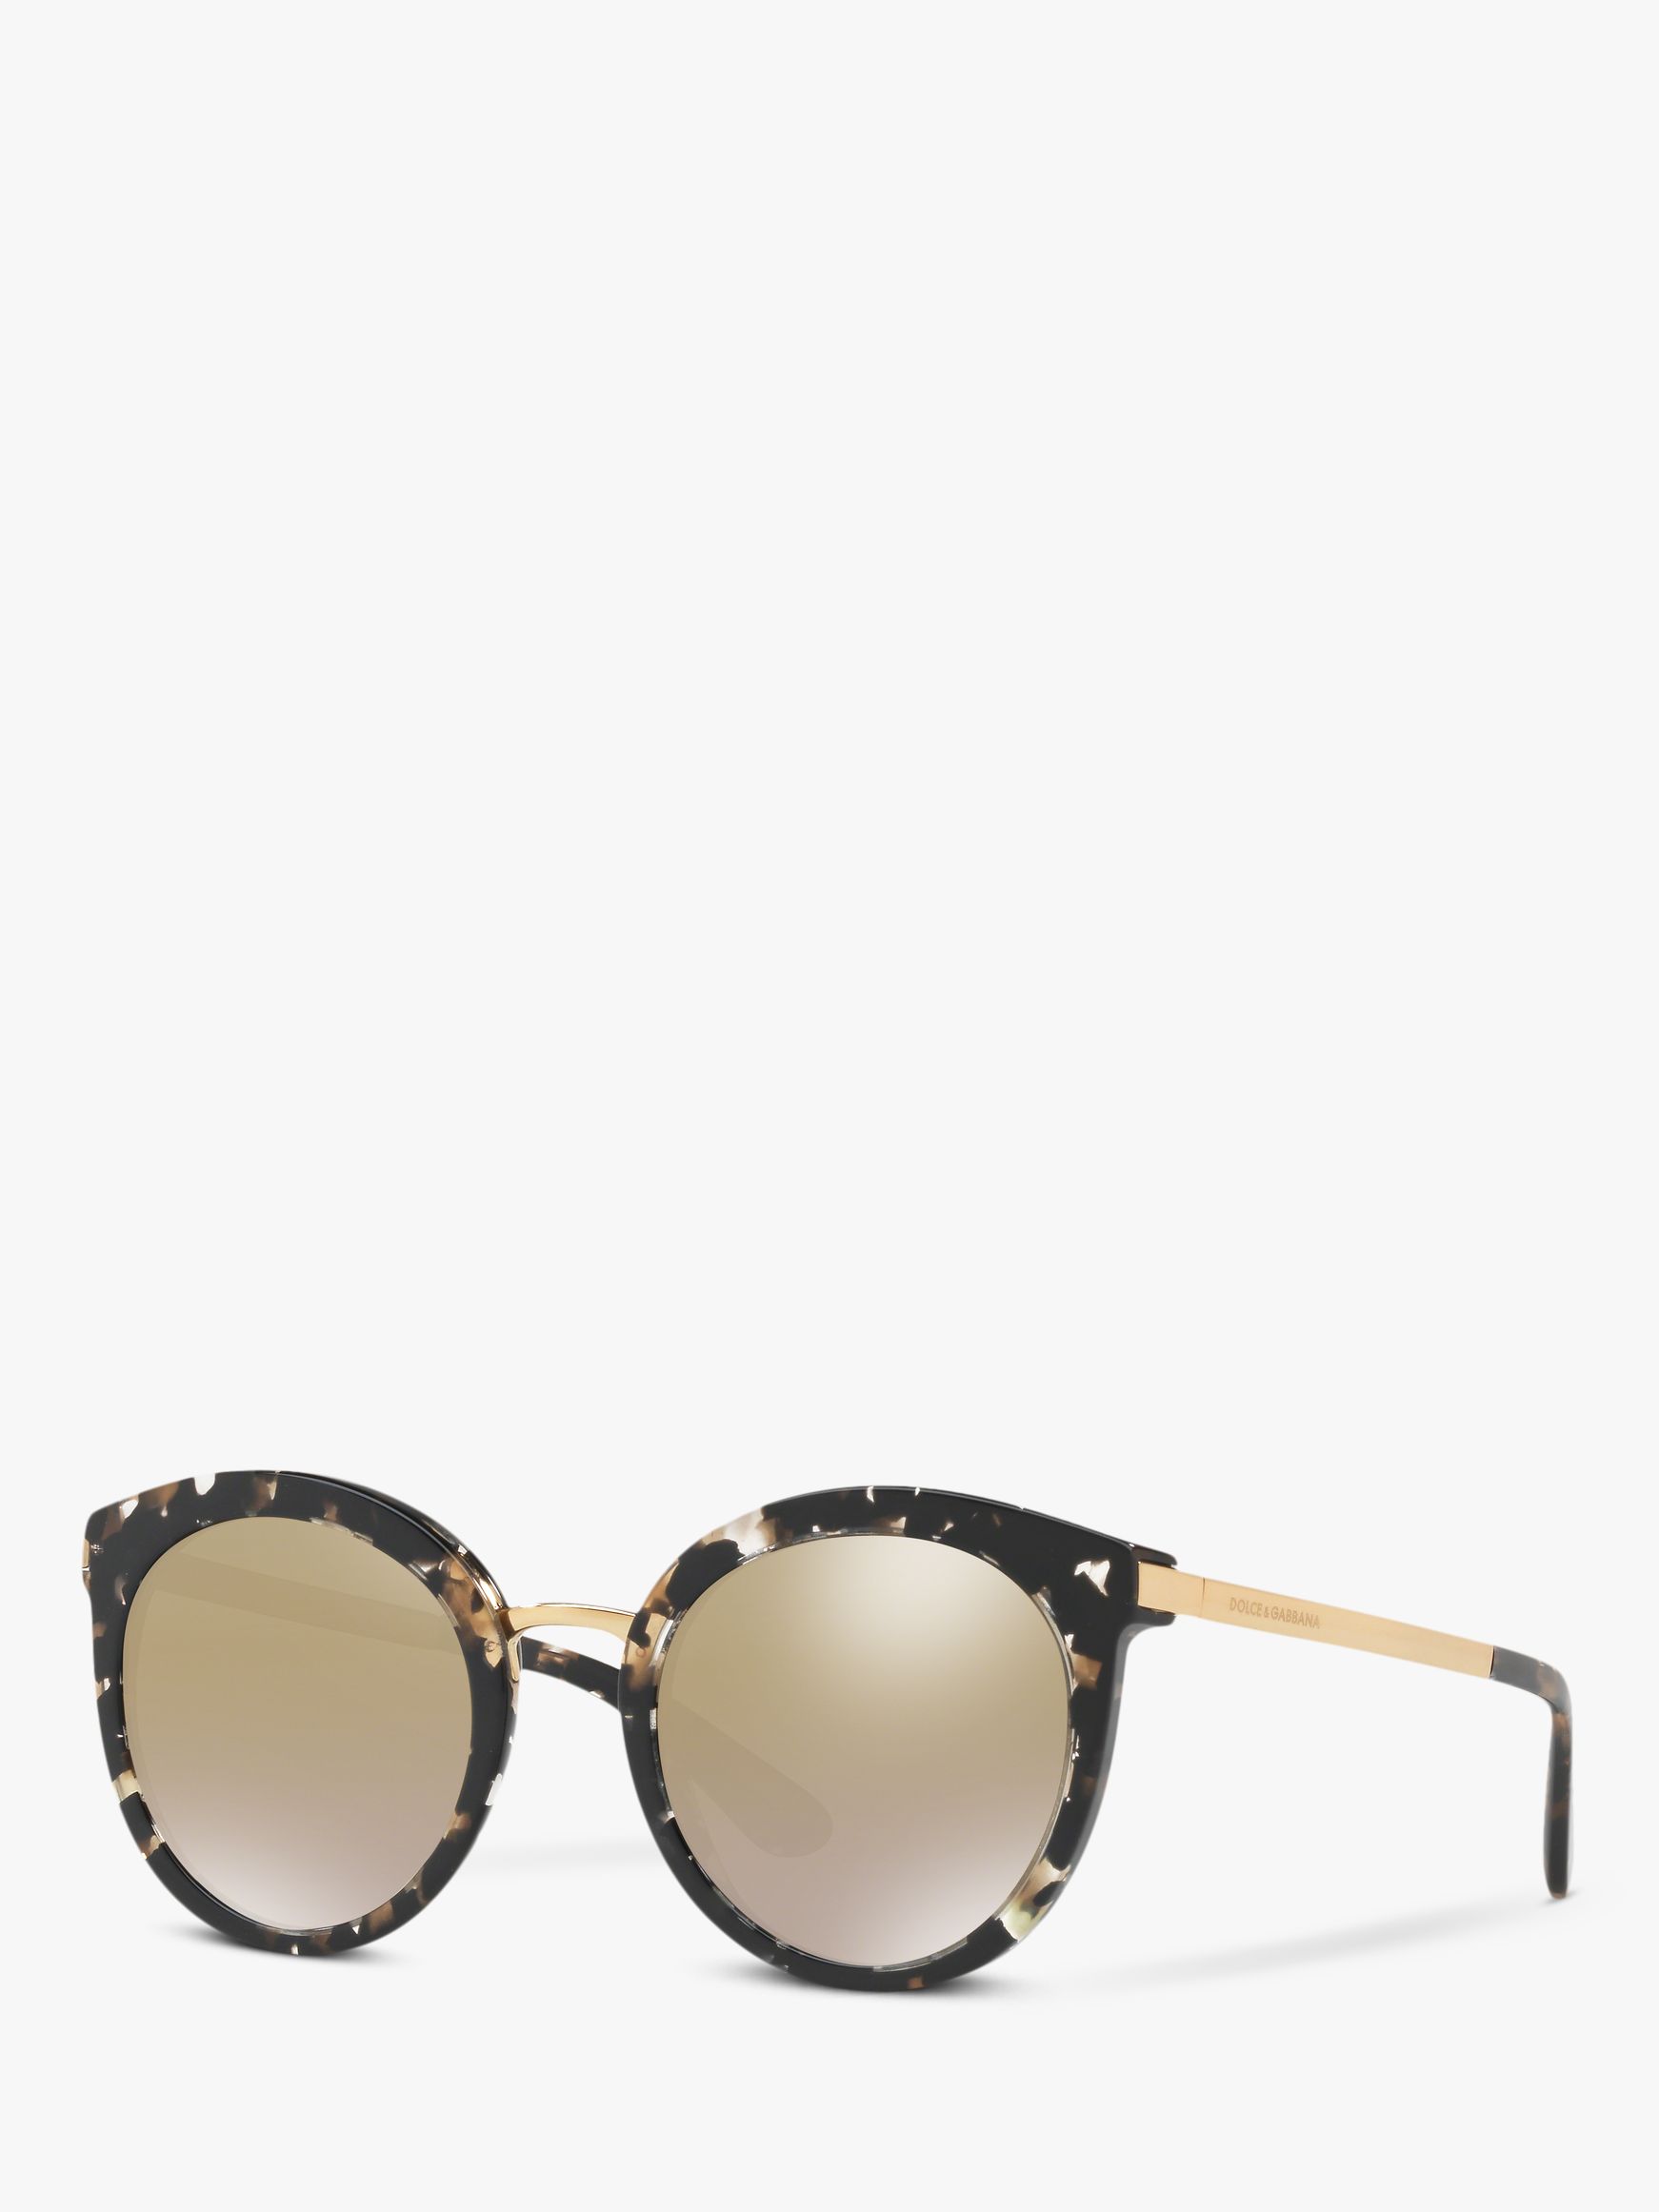 Dolce & Gabbana DG4268 Women's Round Sunglasses, Black/Mirror Gold at John  Lewis & Partners